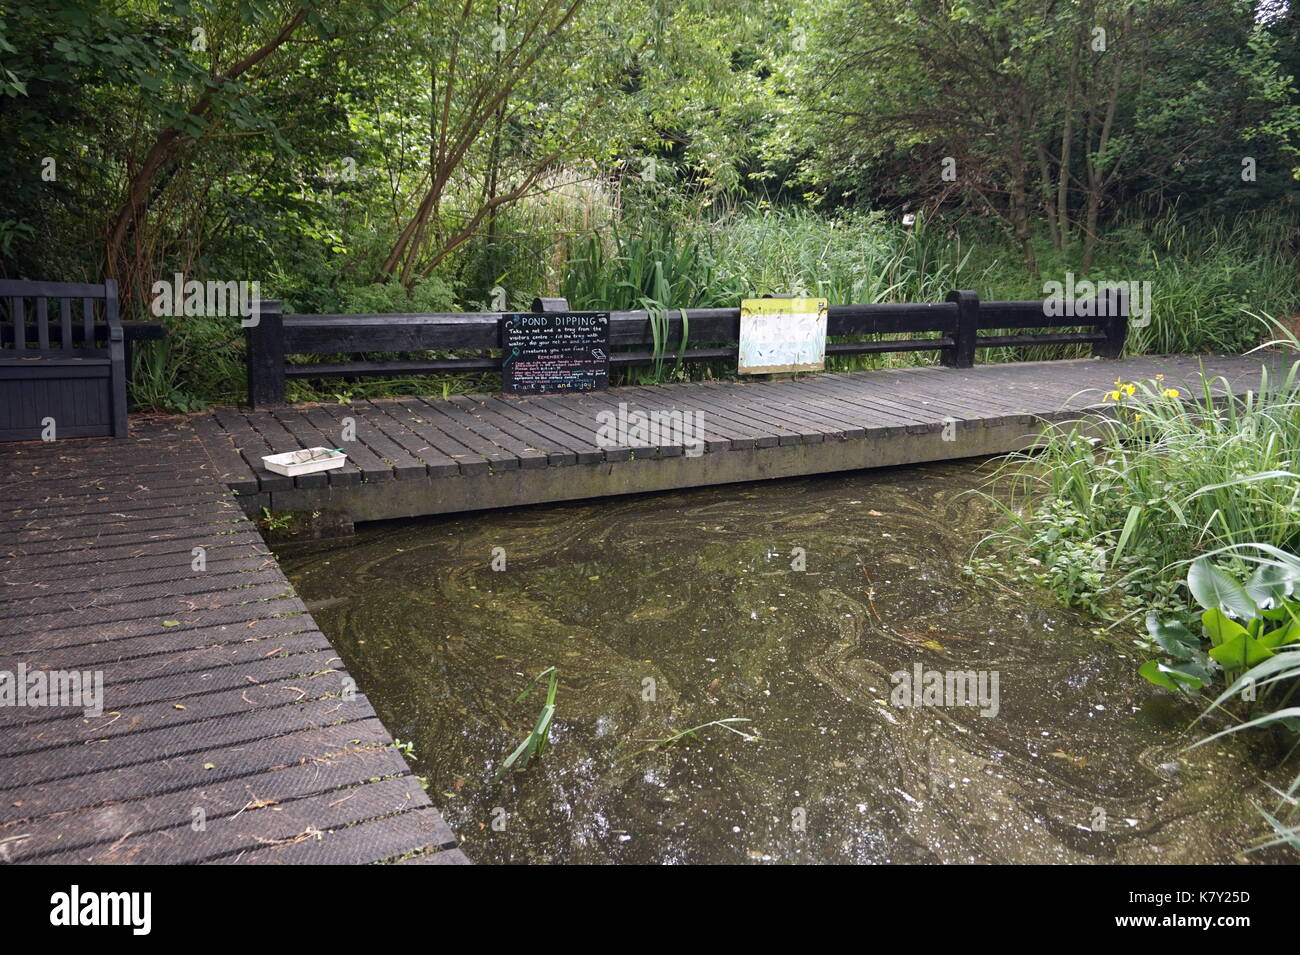 Pond-dipping at Camley Street Natural Park, urban wildlife park, London Stock Photo